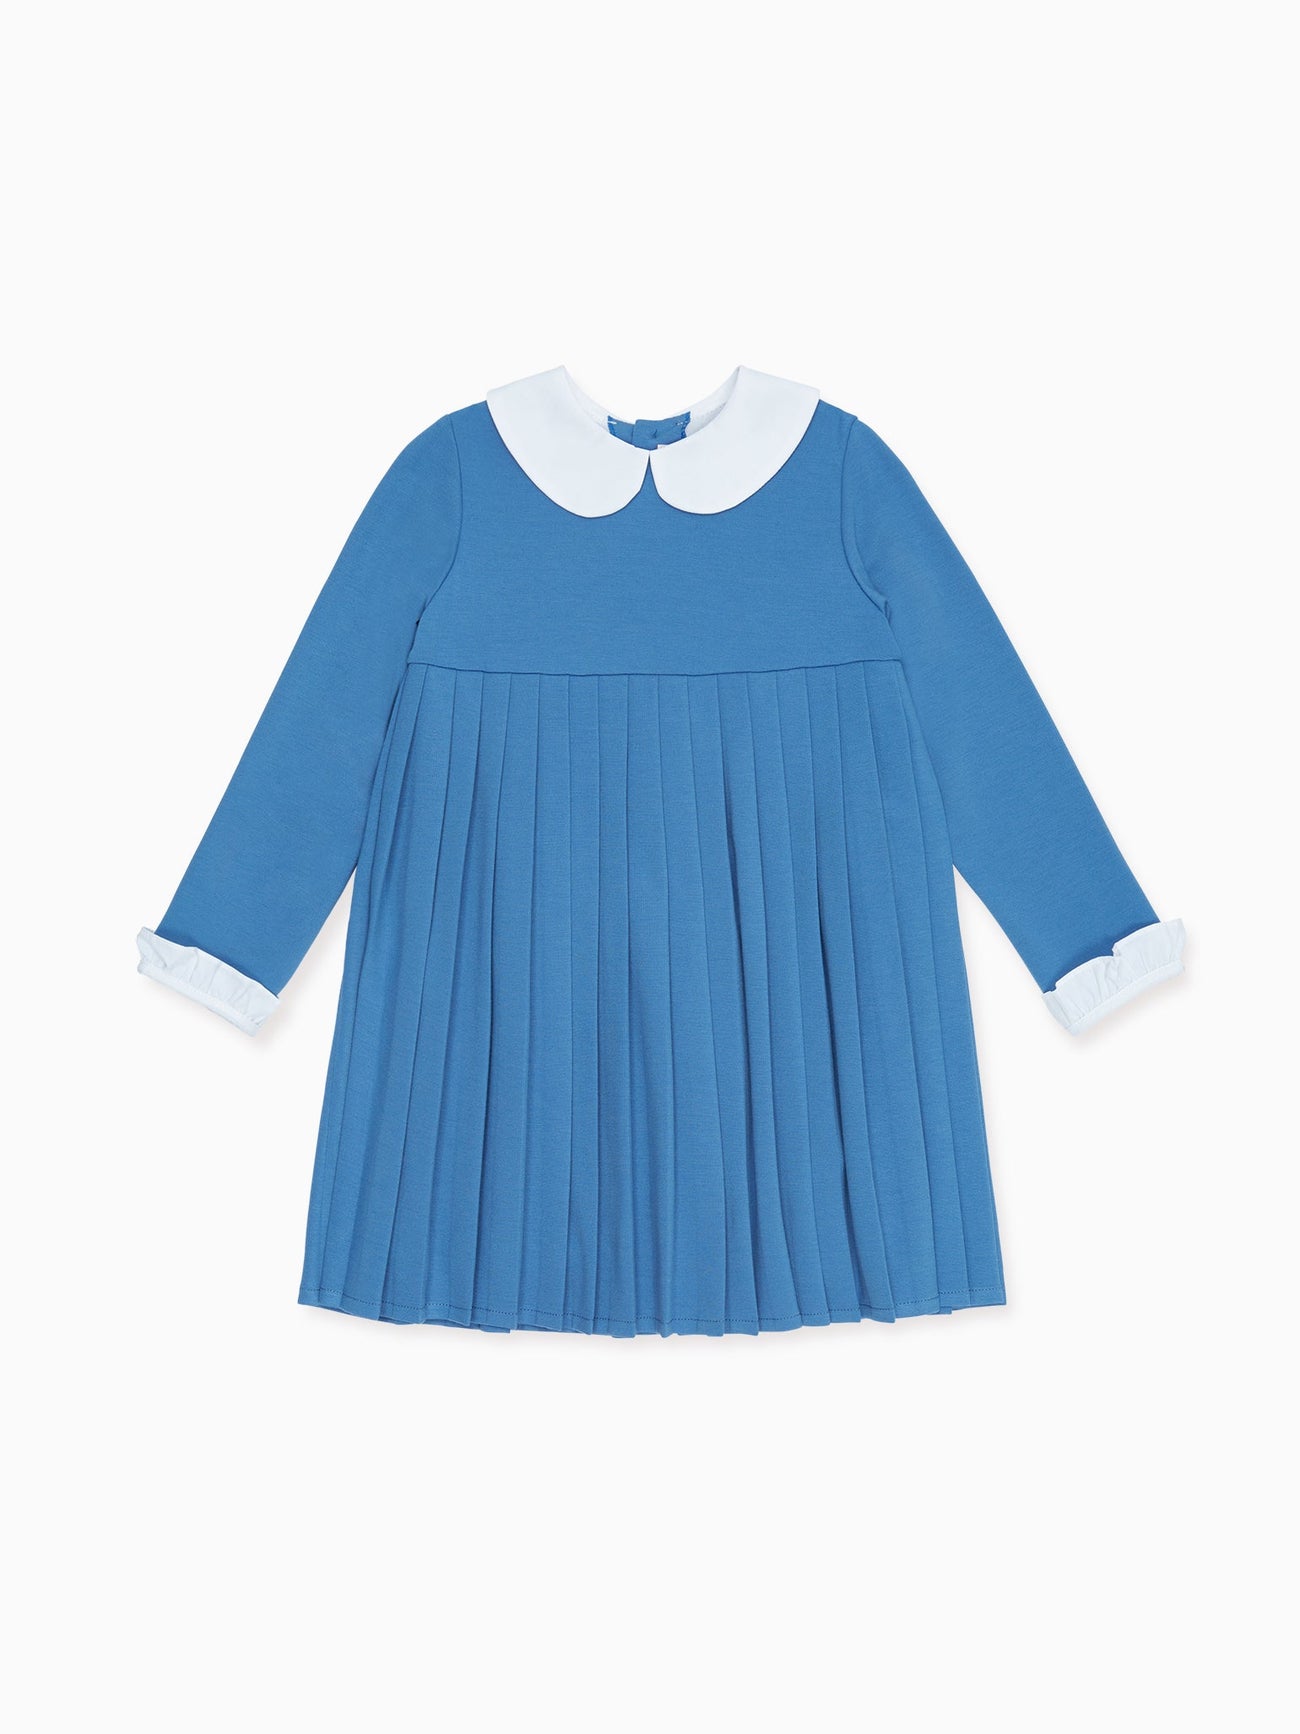 Blue Anna Girl Empire Dress